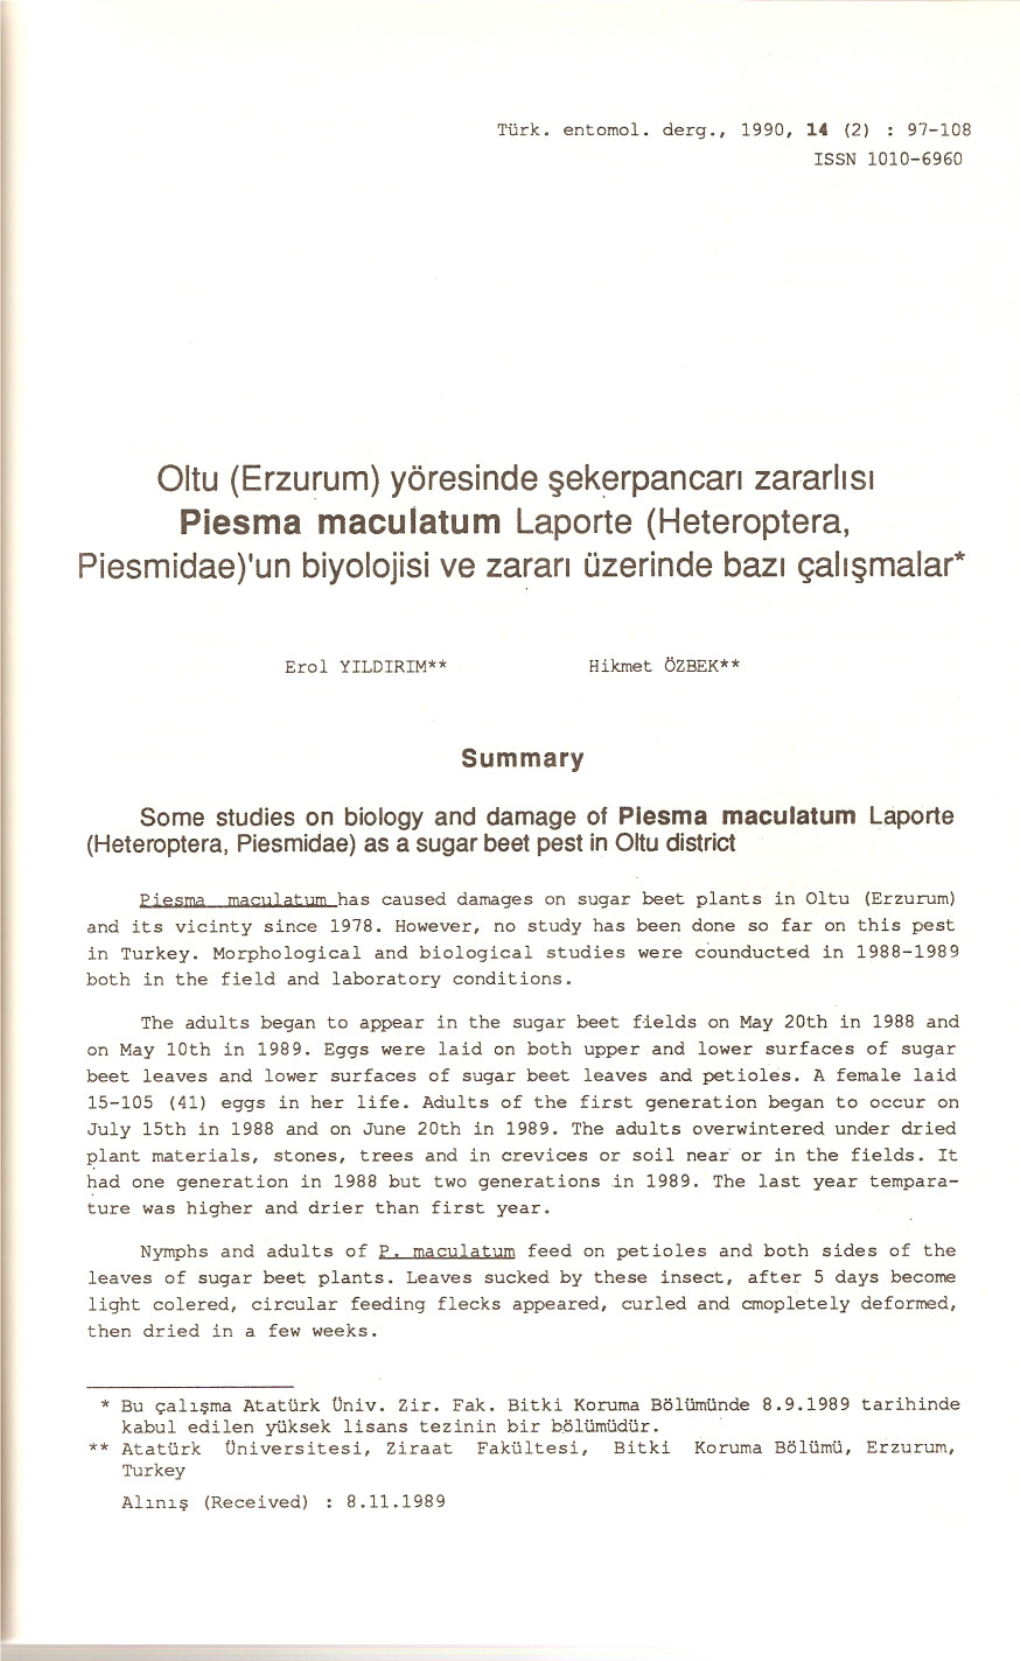 (Erzurum) Yöresinde Sekerpancari Zararlisi Piesma Maculatum Laporte